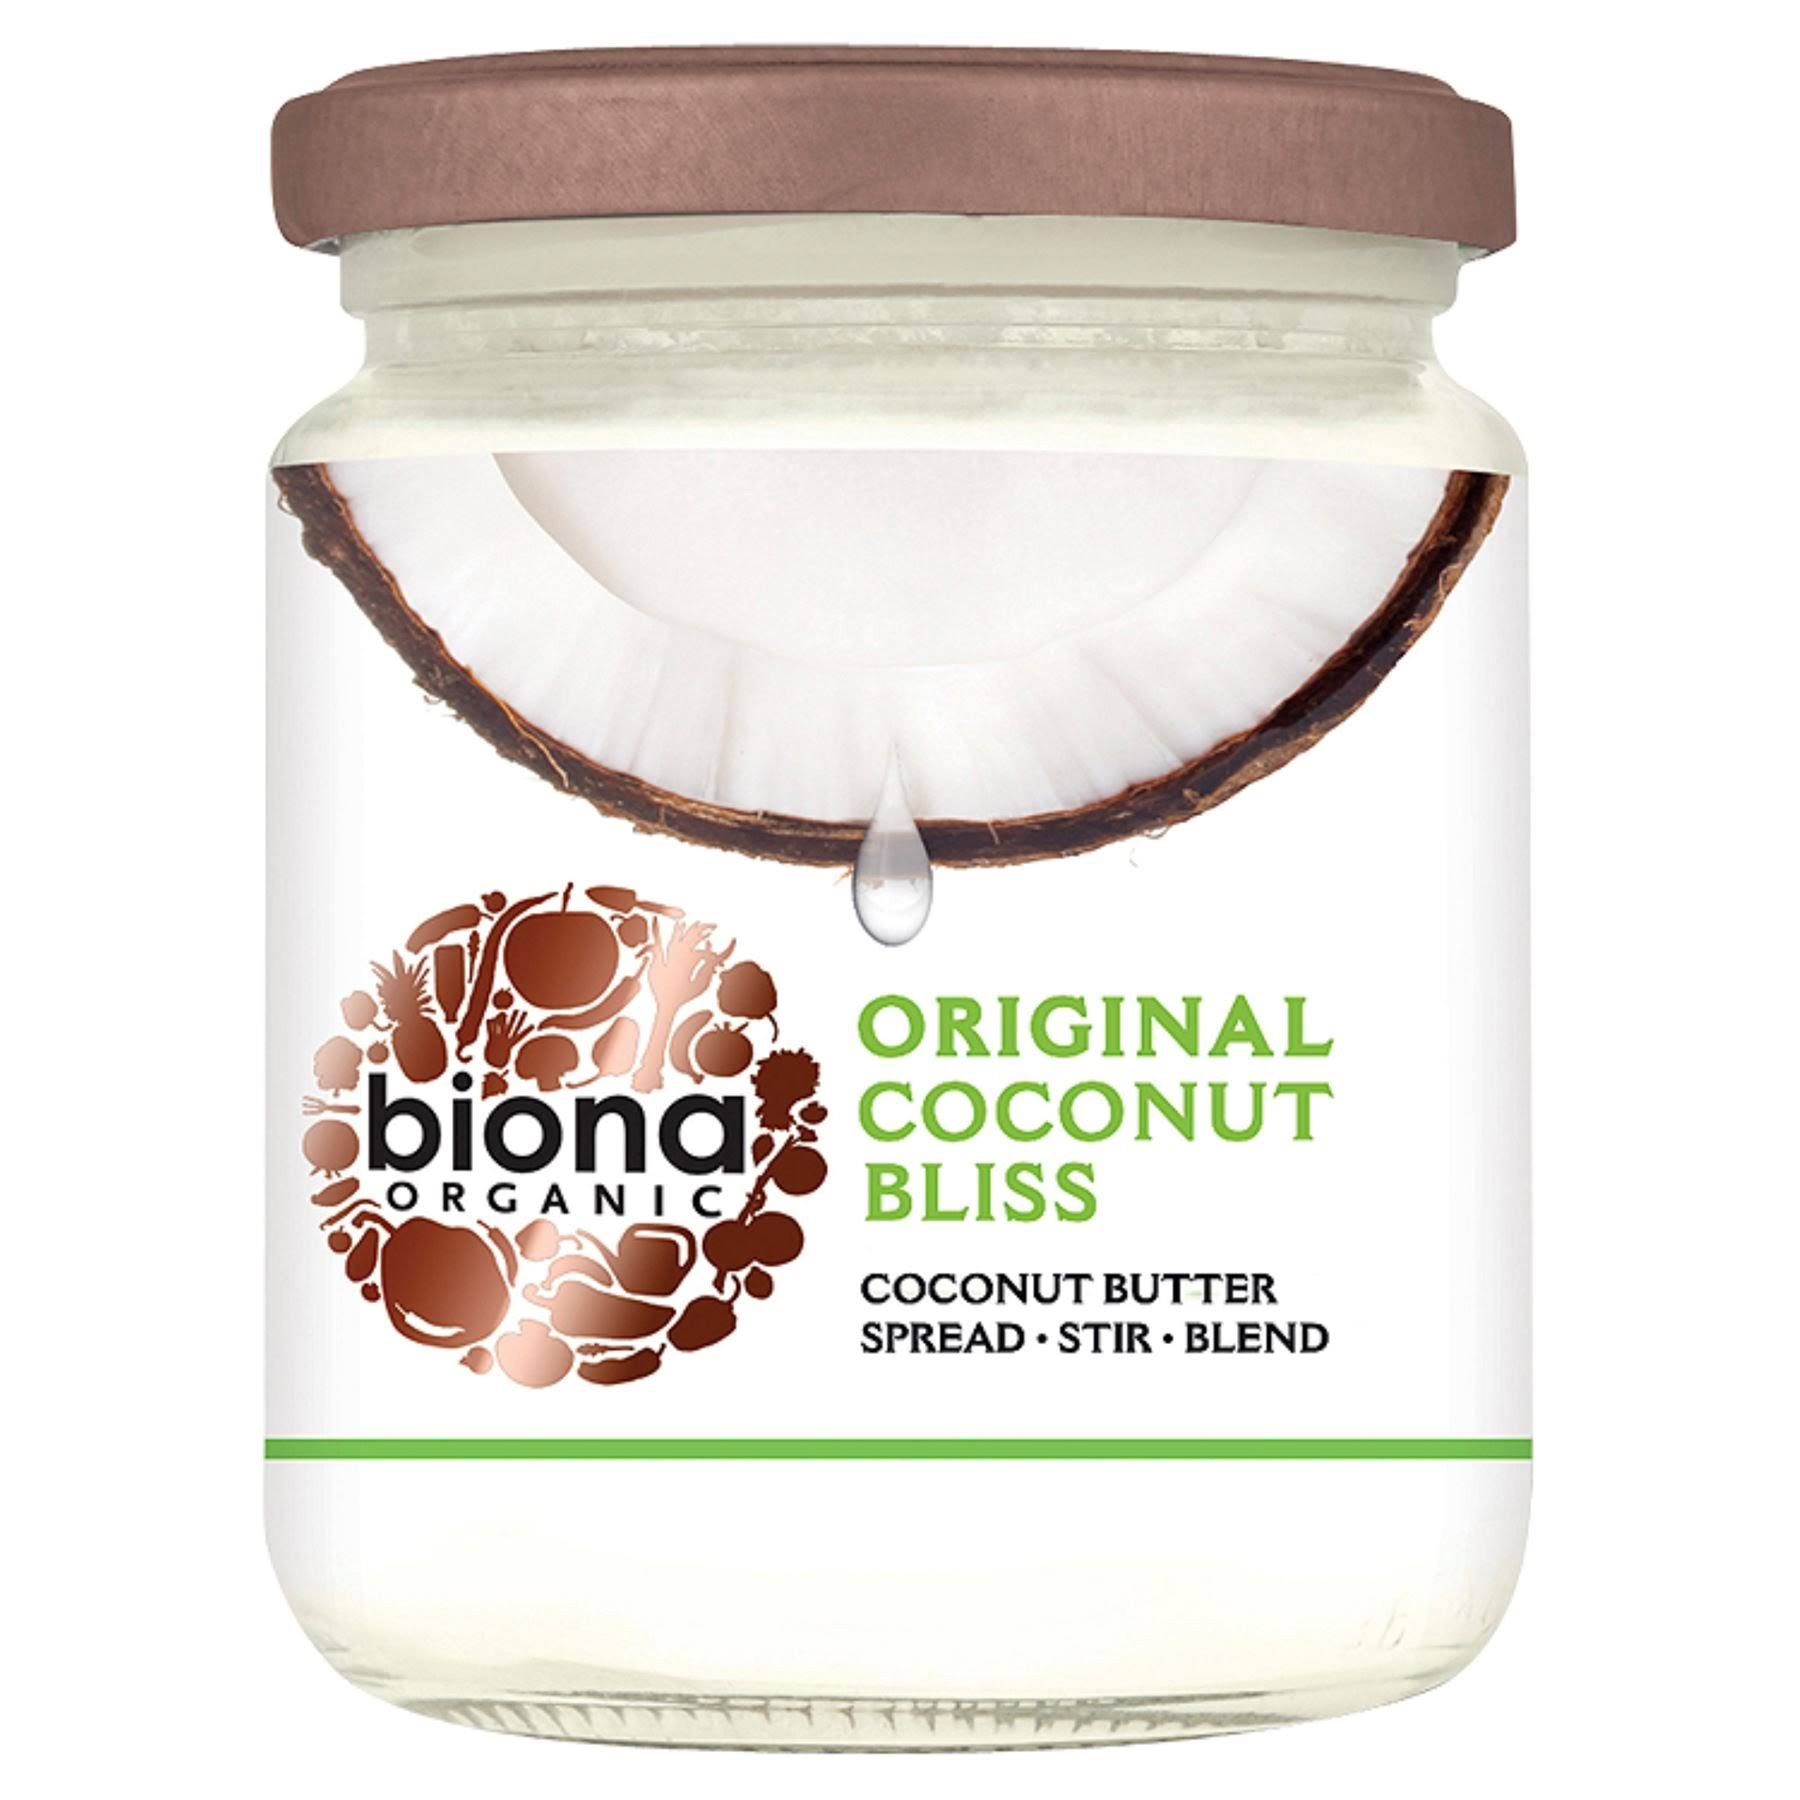 Biona Organic Original Coconut Bliss - Coconut Butter, 250g